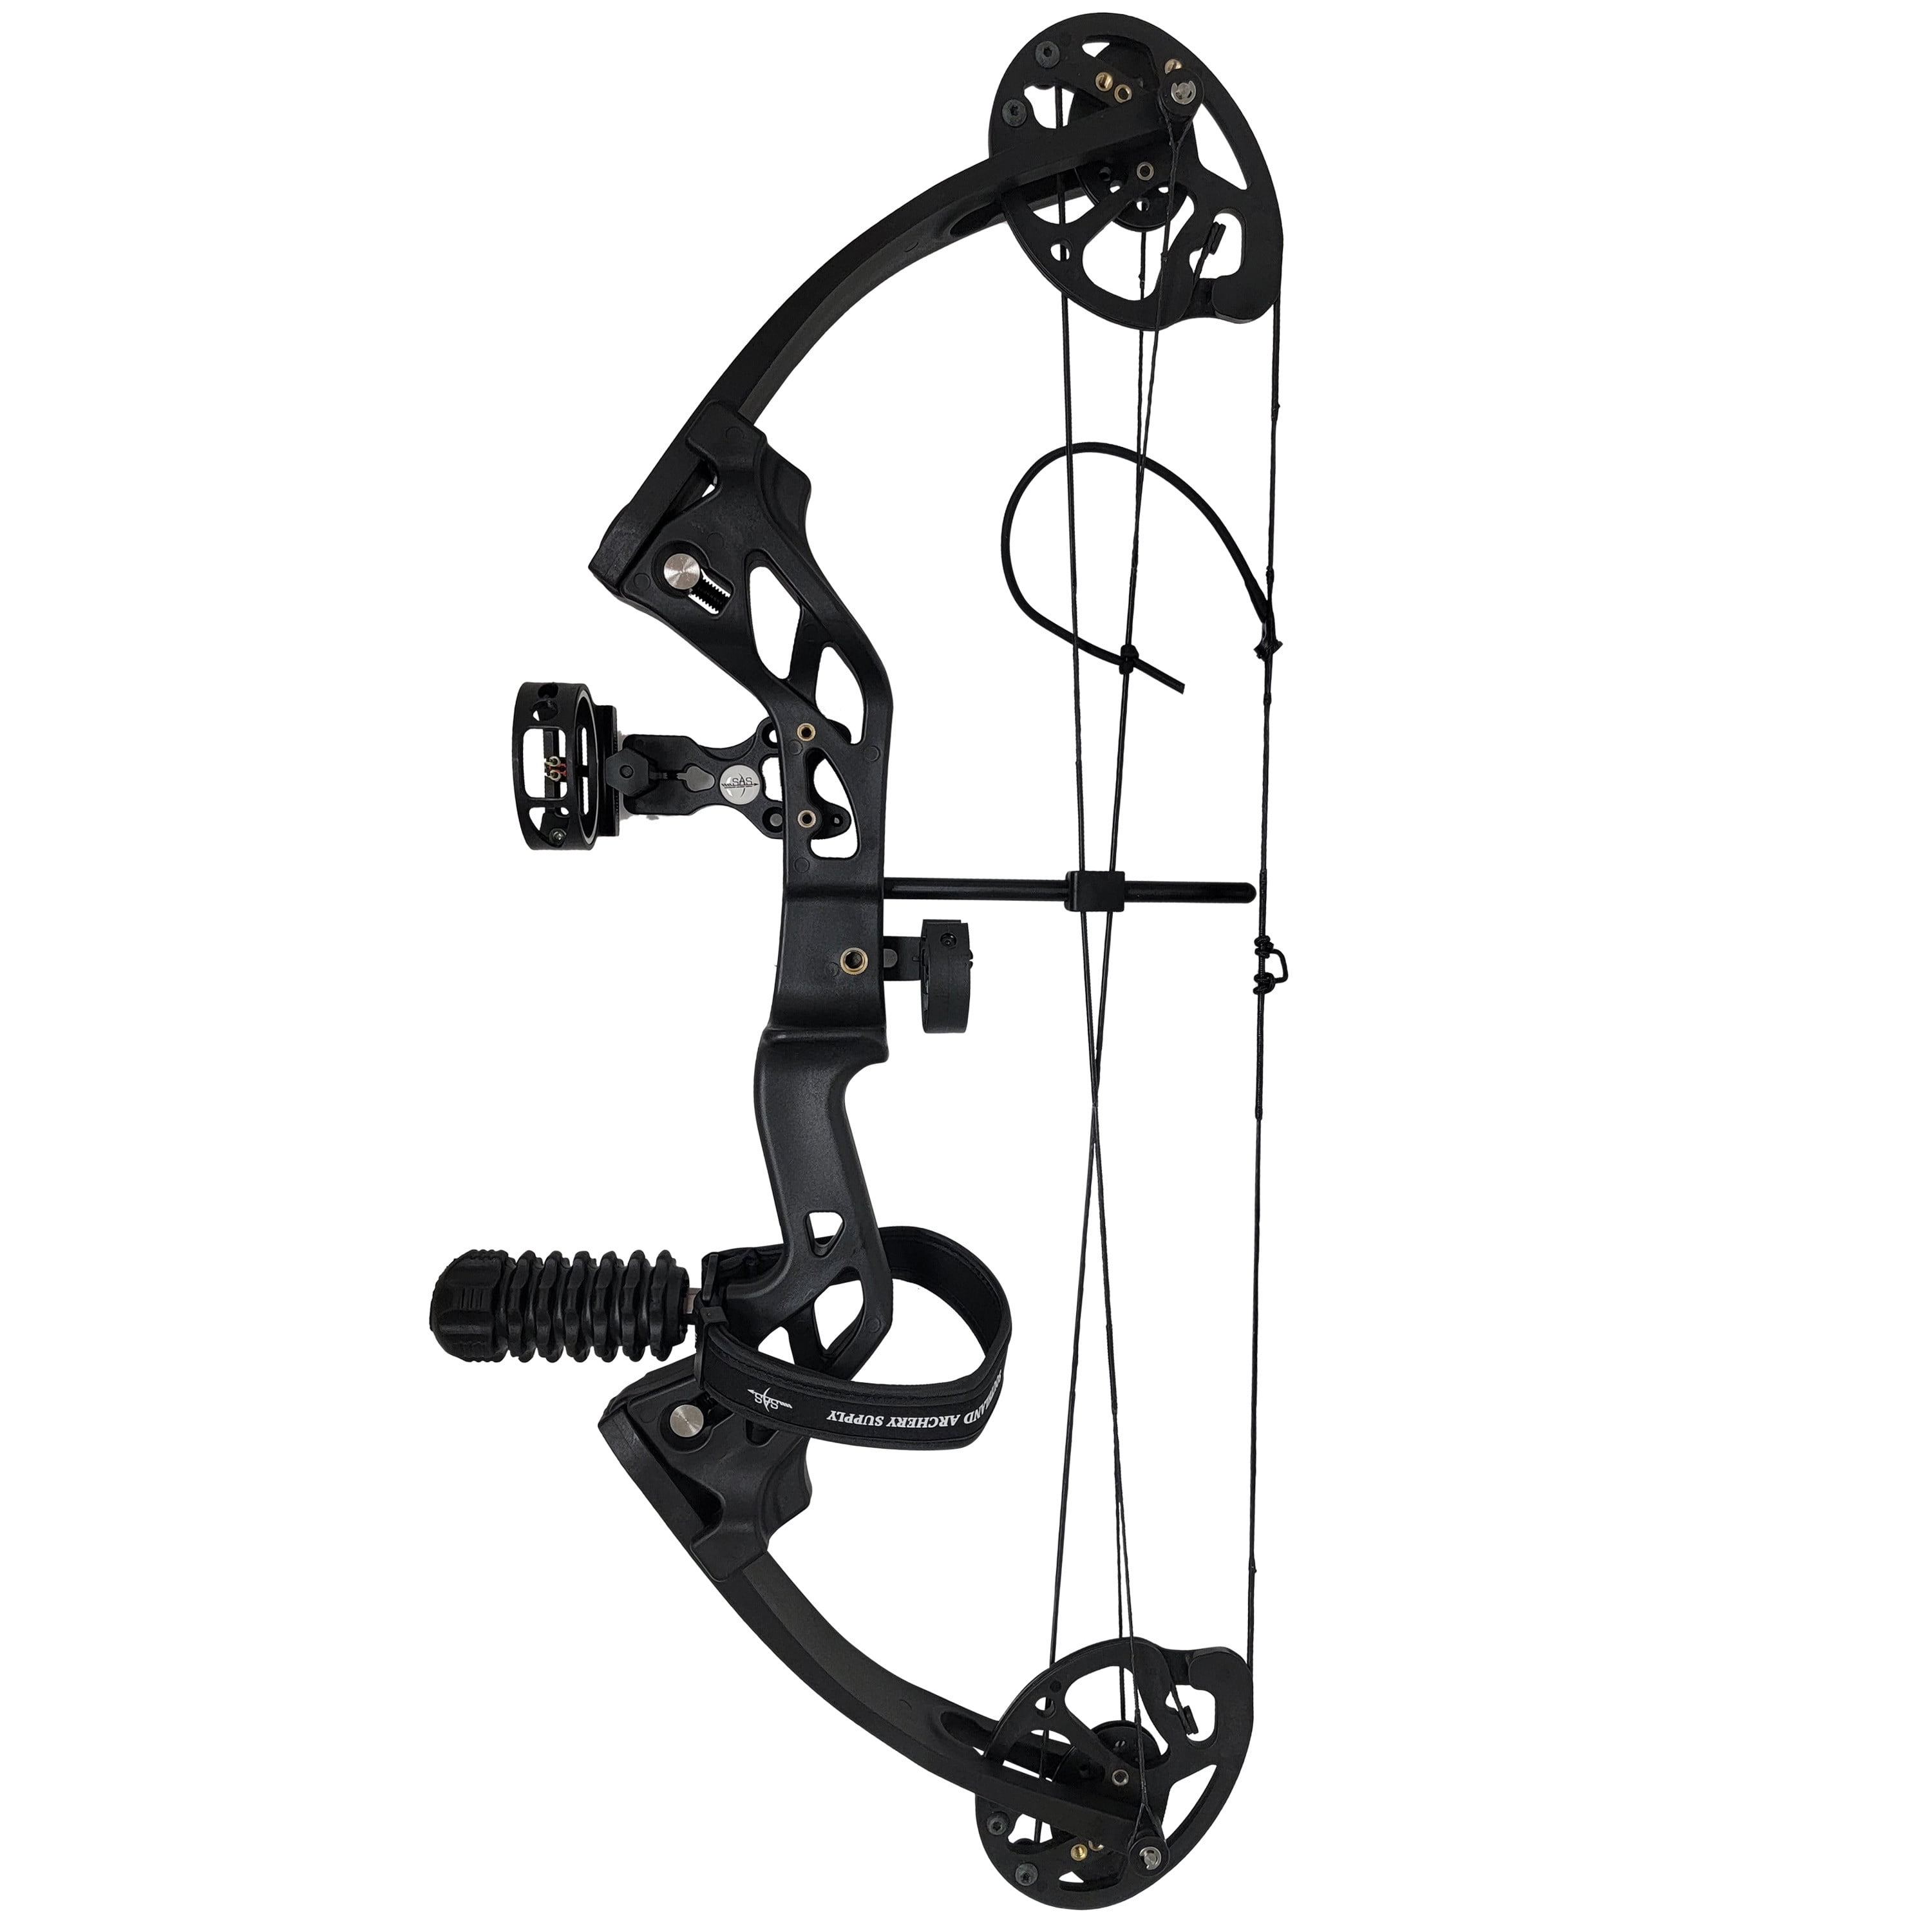 T Bow Square for Archery Recurve & Compound Bow Archery Accessories Black 